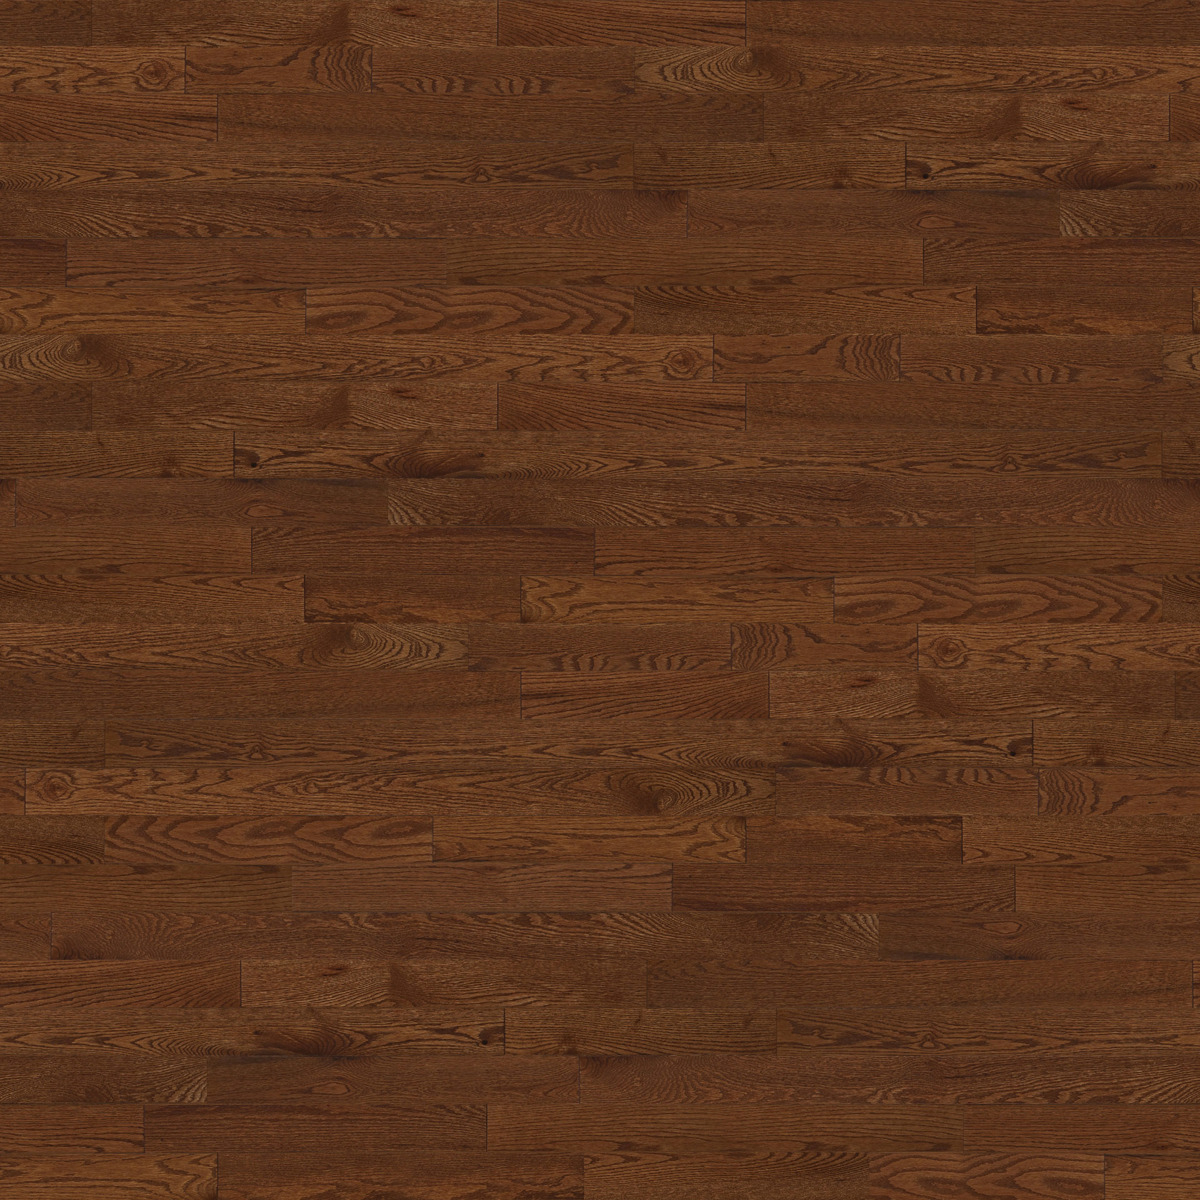 Red Oak Solid Hardwood Flooring 3 1 4, 3 1 4 Red Oak Hardwood Flooring